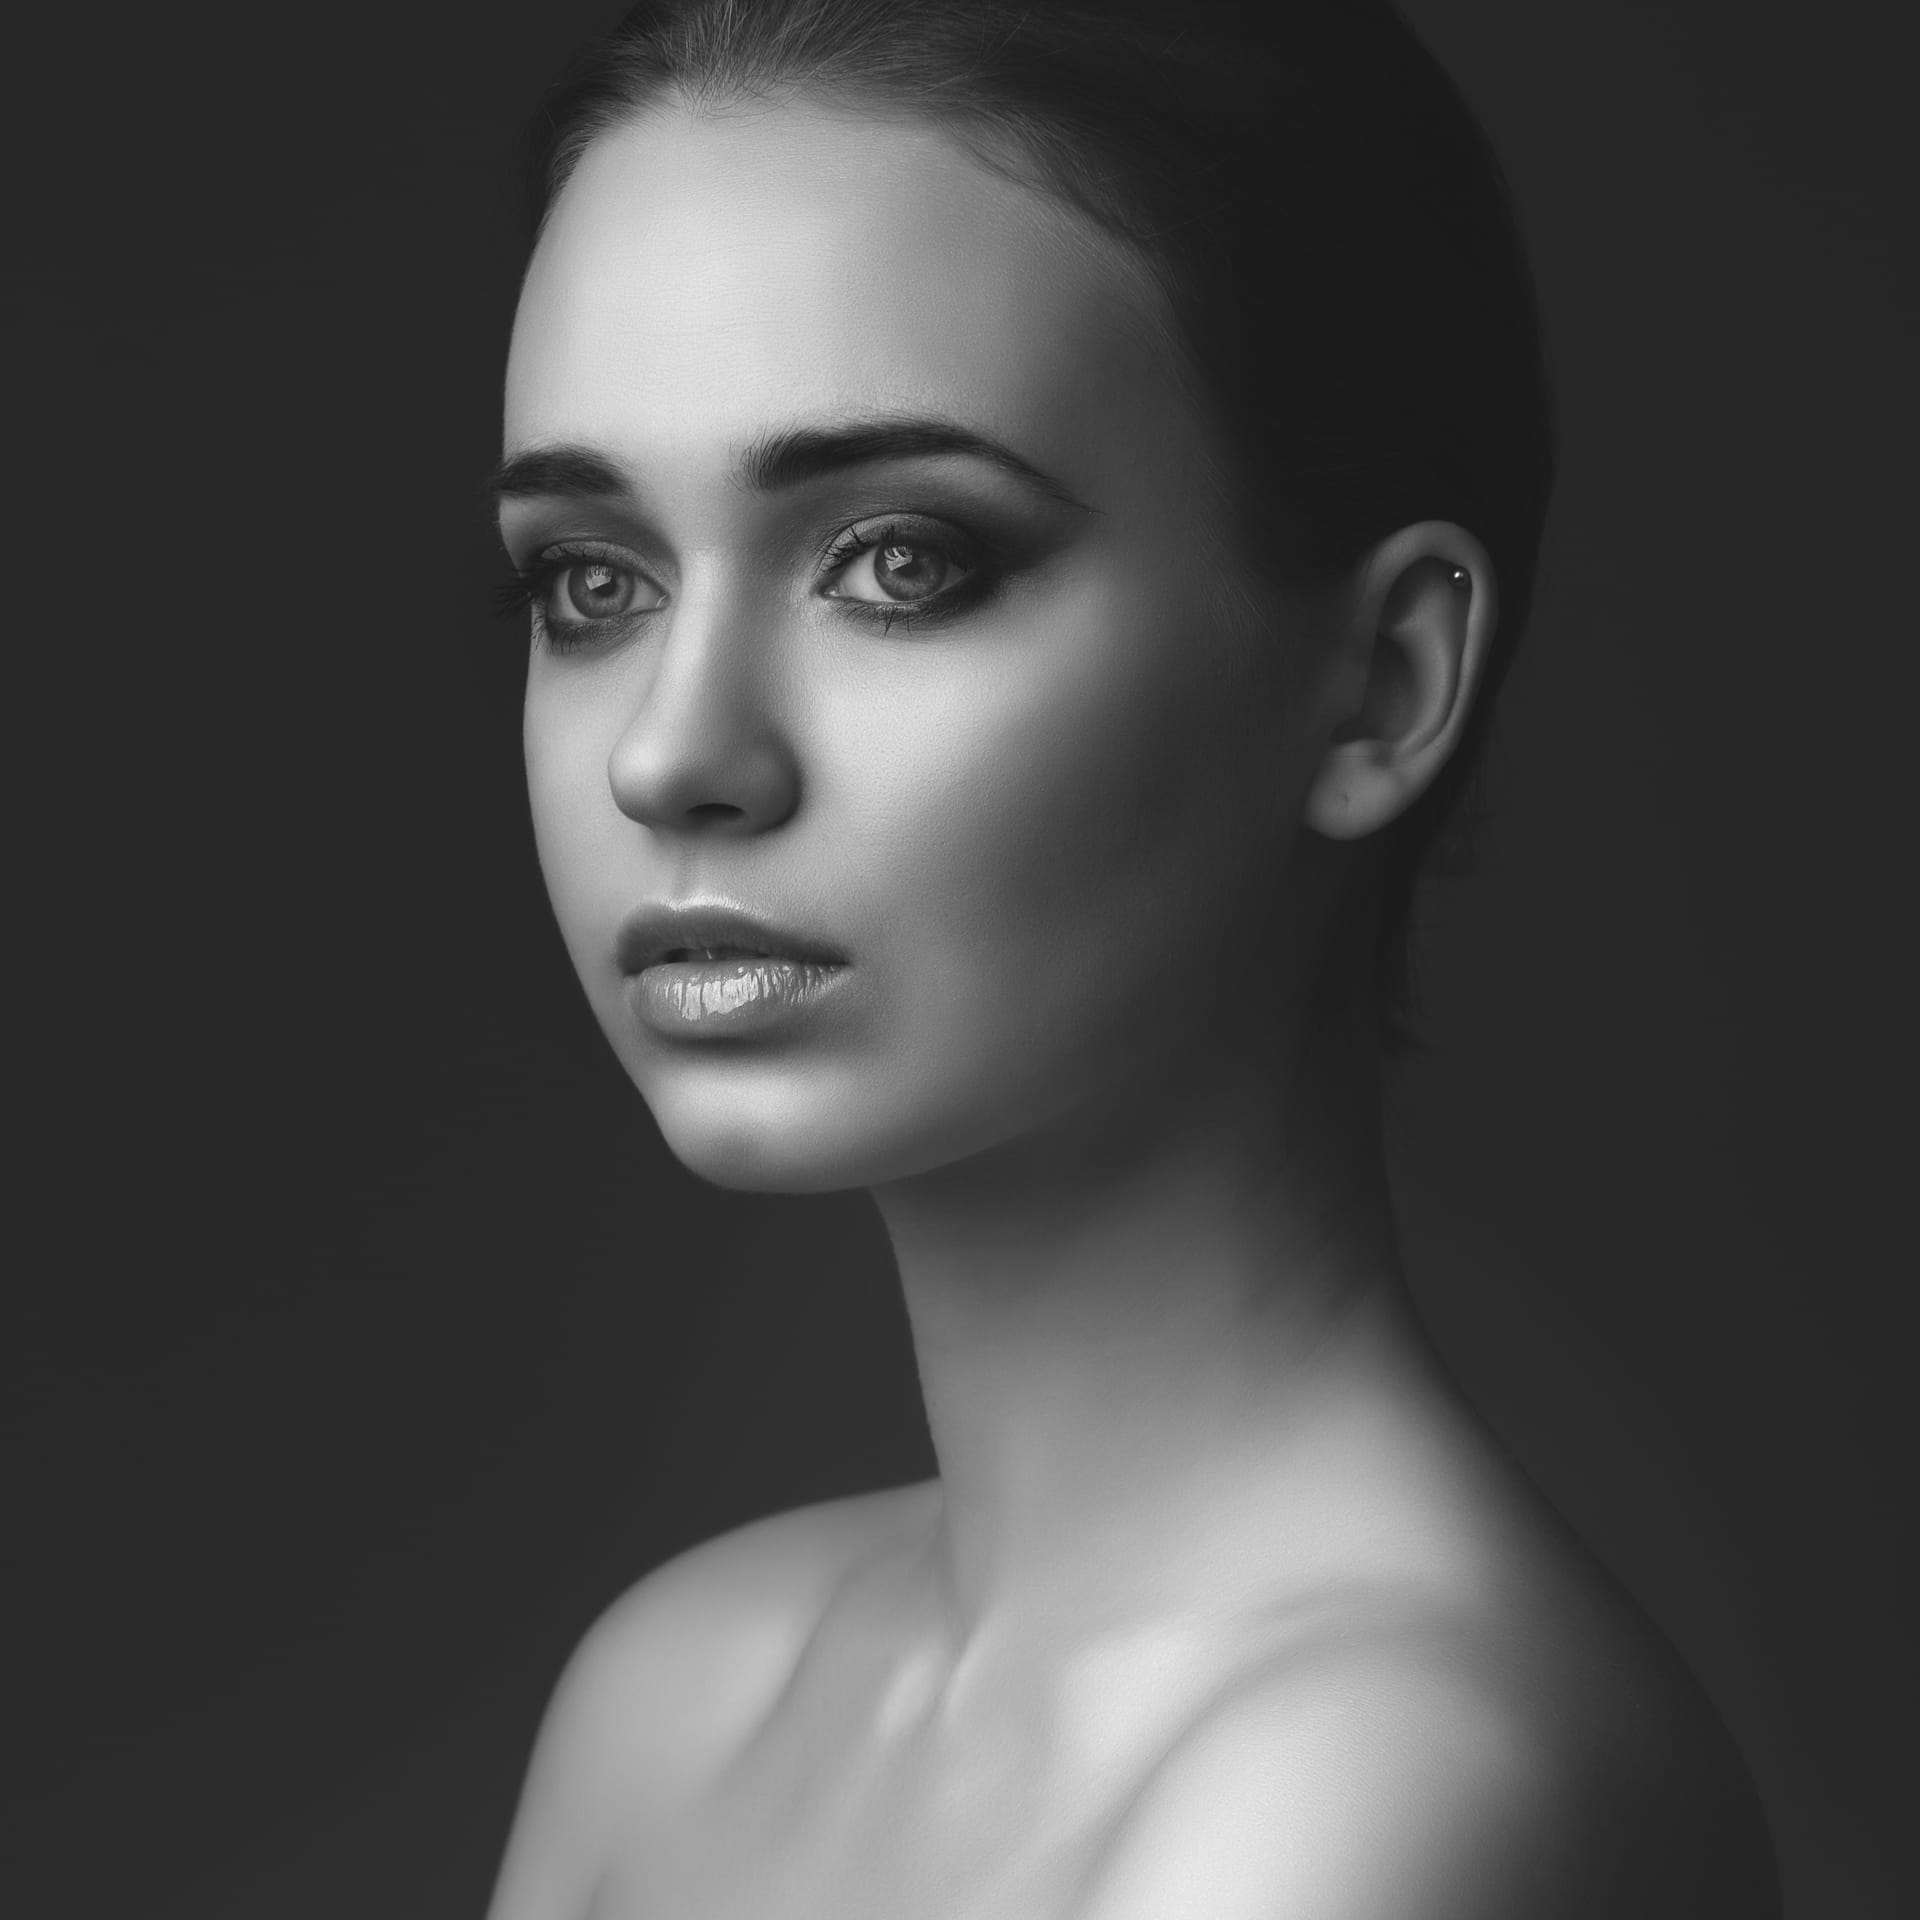 Studio portrait young beautiful girl dark background black white